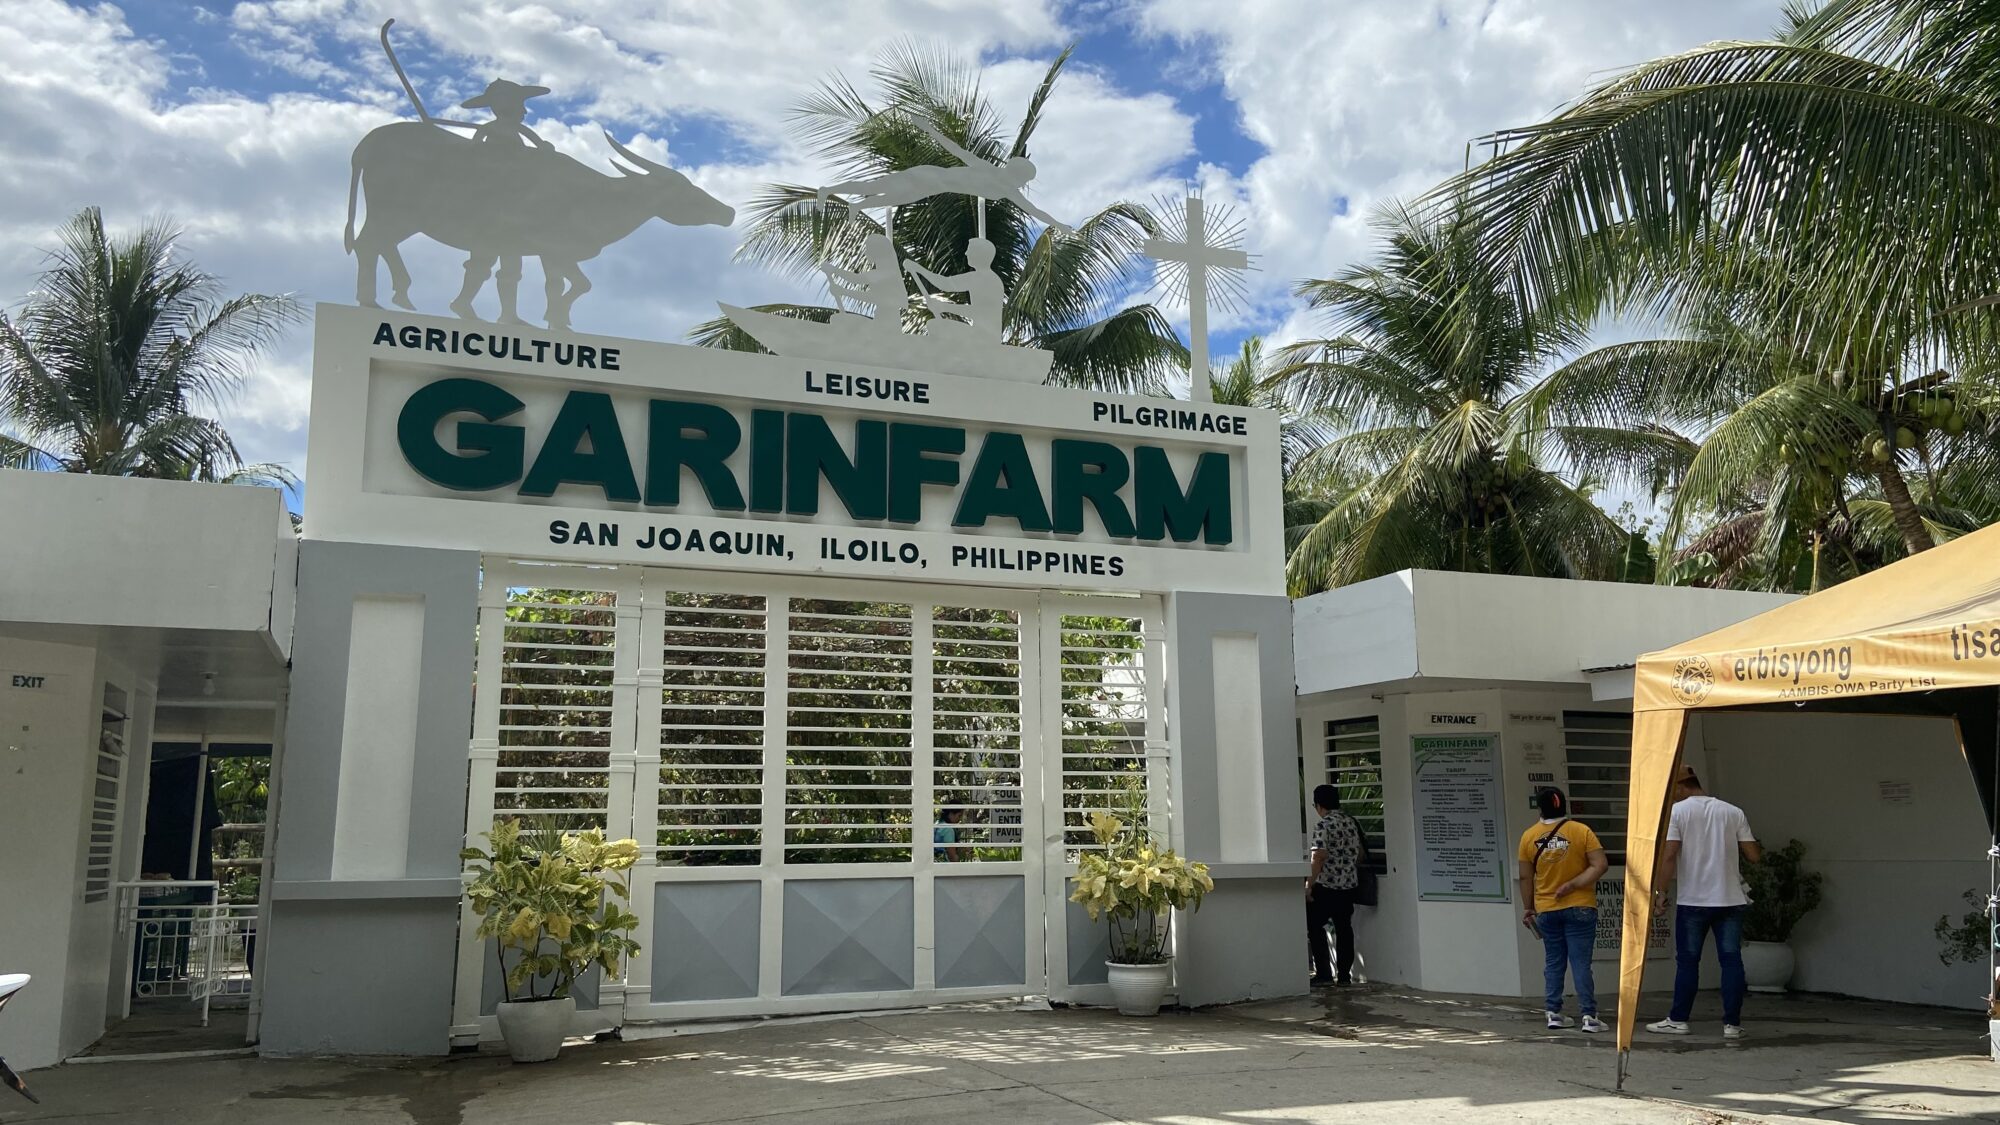 Garin Farm Pilgrimage Resort